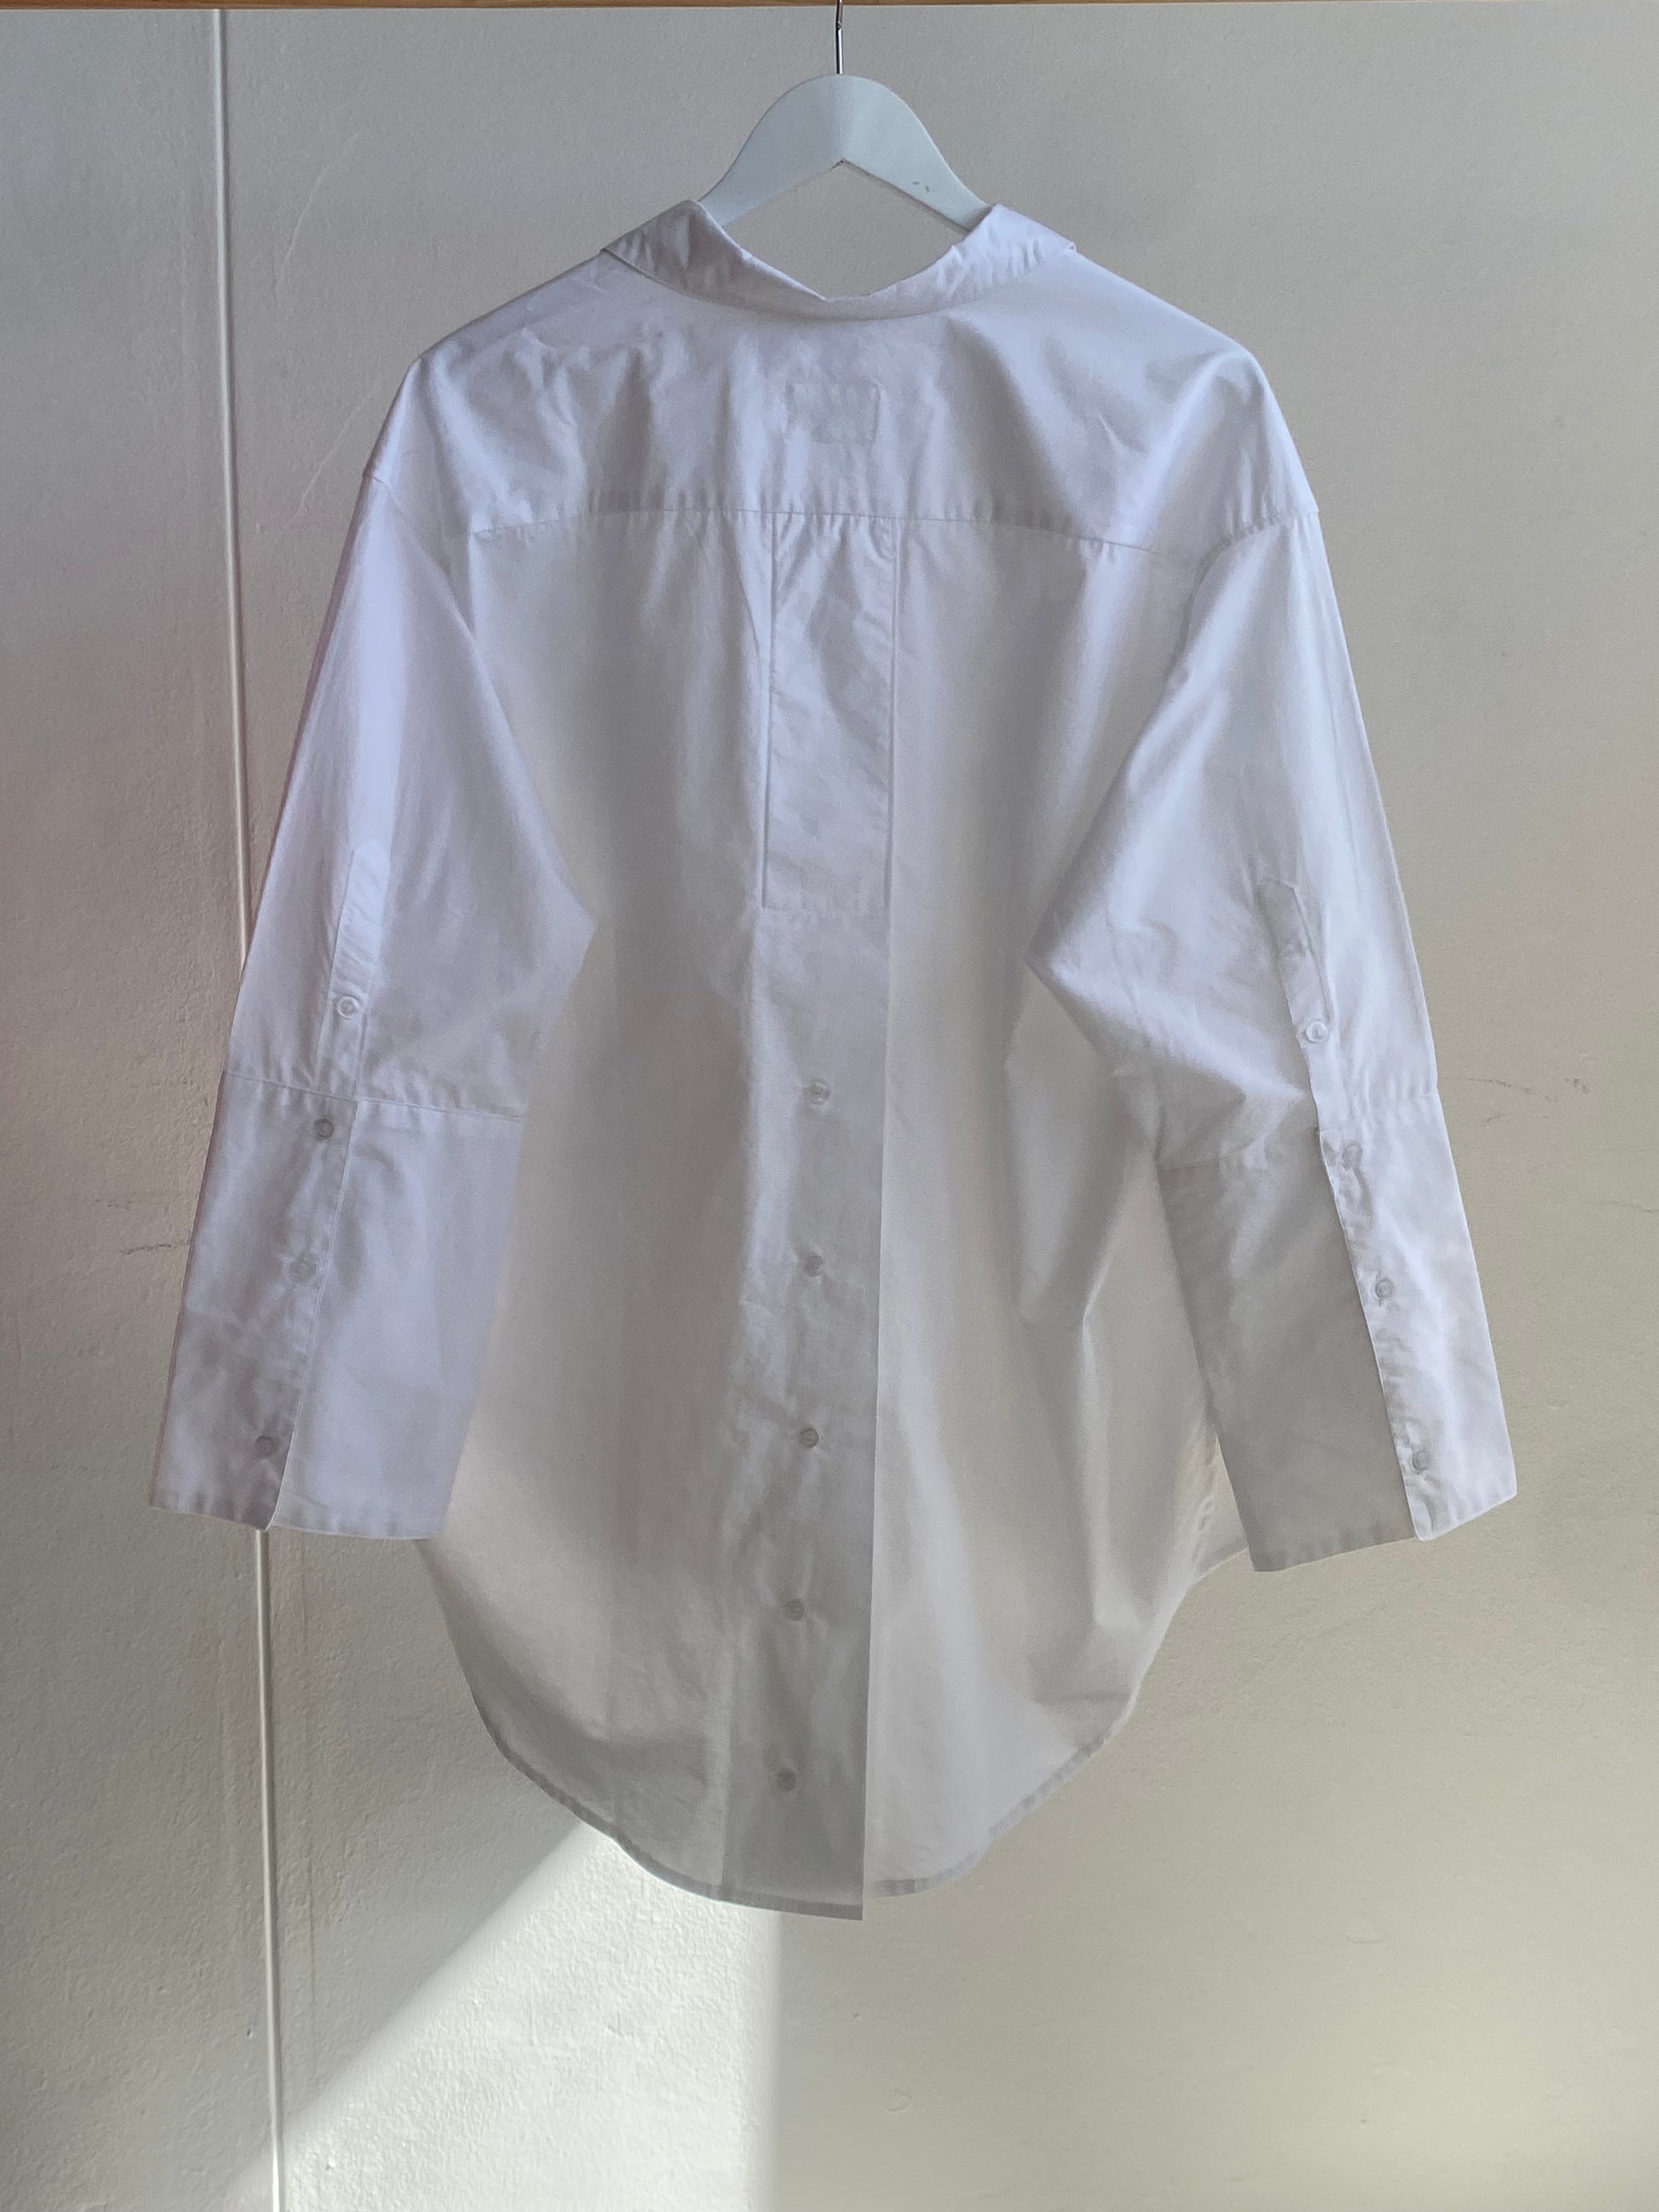 Split Back Shirt – MUNA By Yumna